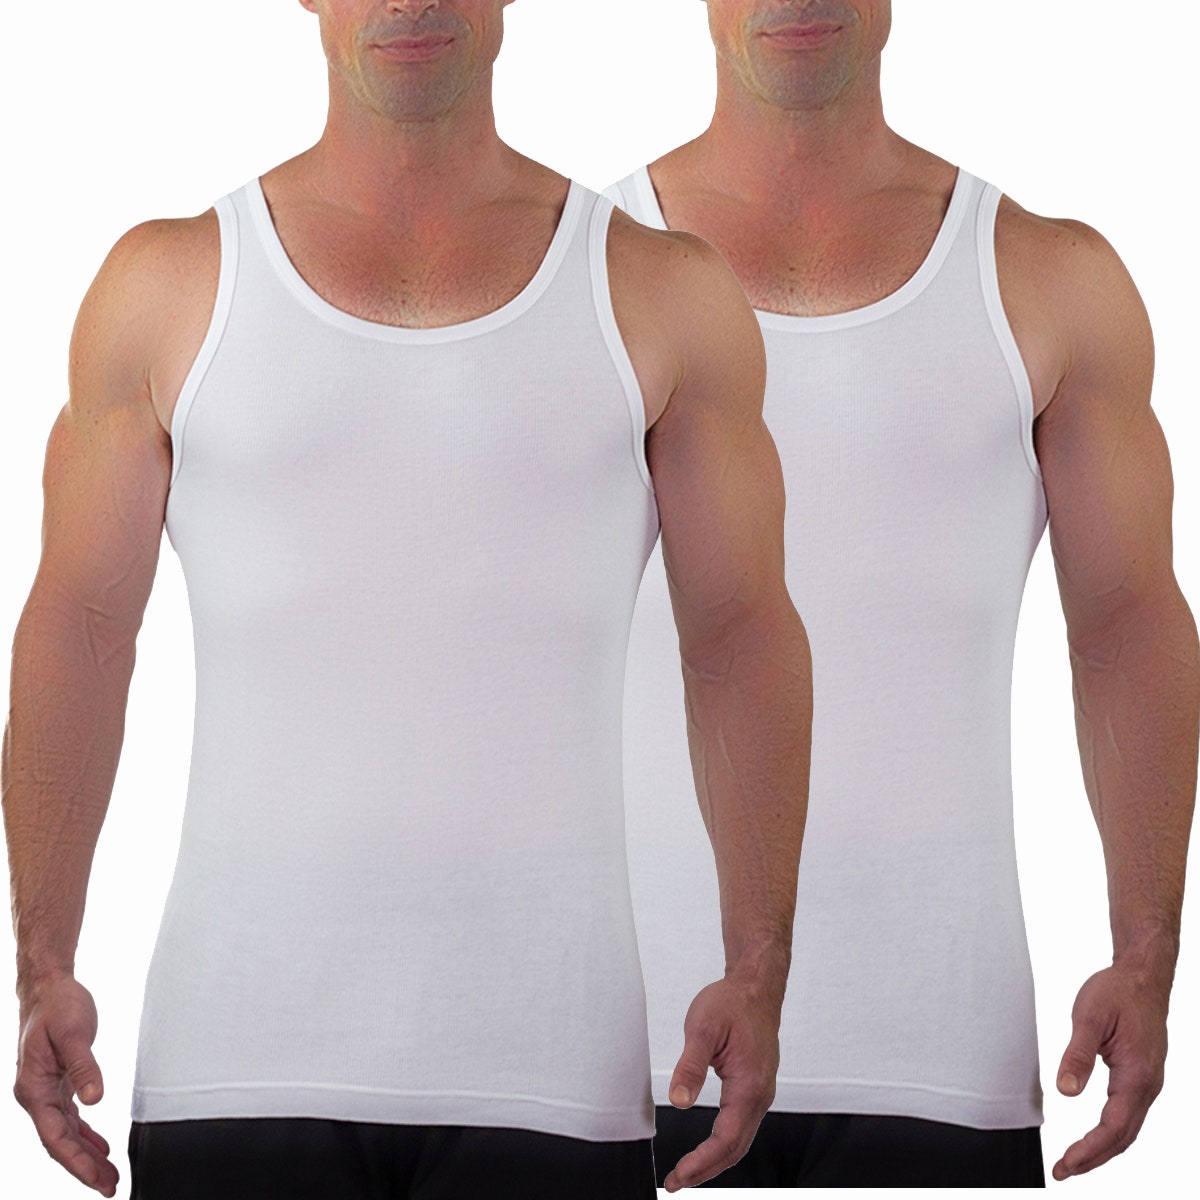 Hanes Men's 4 Pack Comfortsoft T-Shirt, 2 Light Steel / 2 Pale Pink, L (4PK)